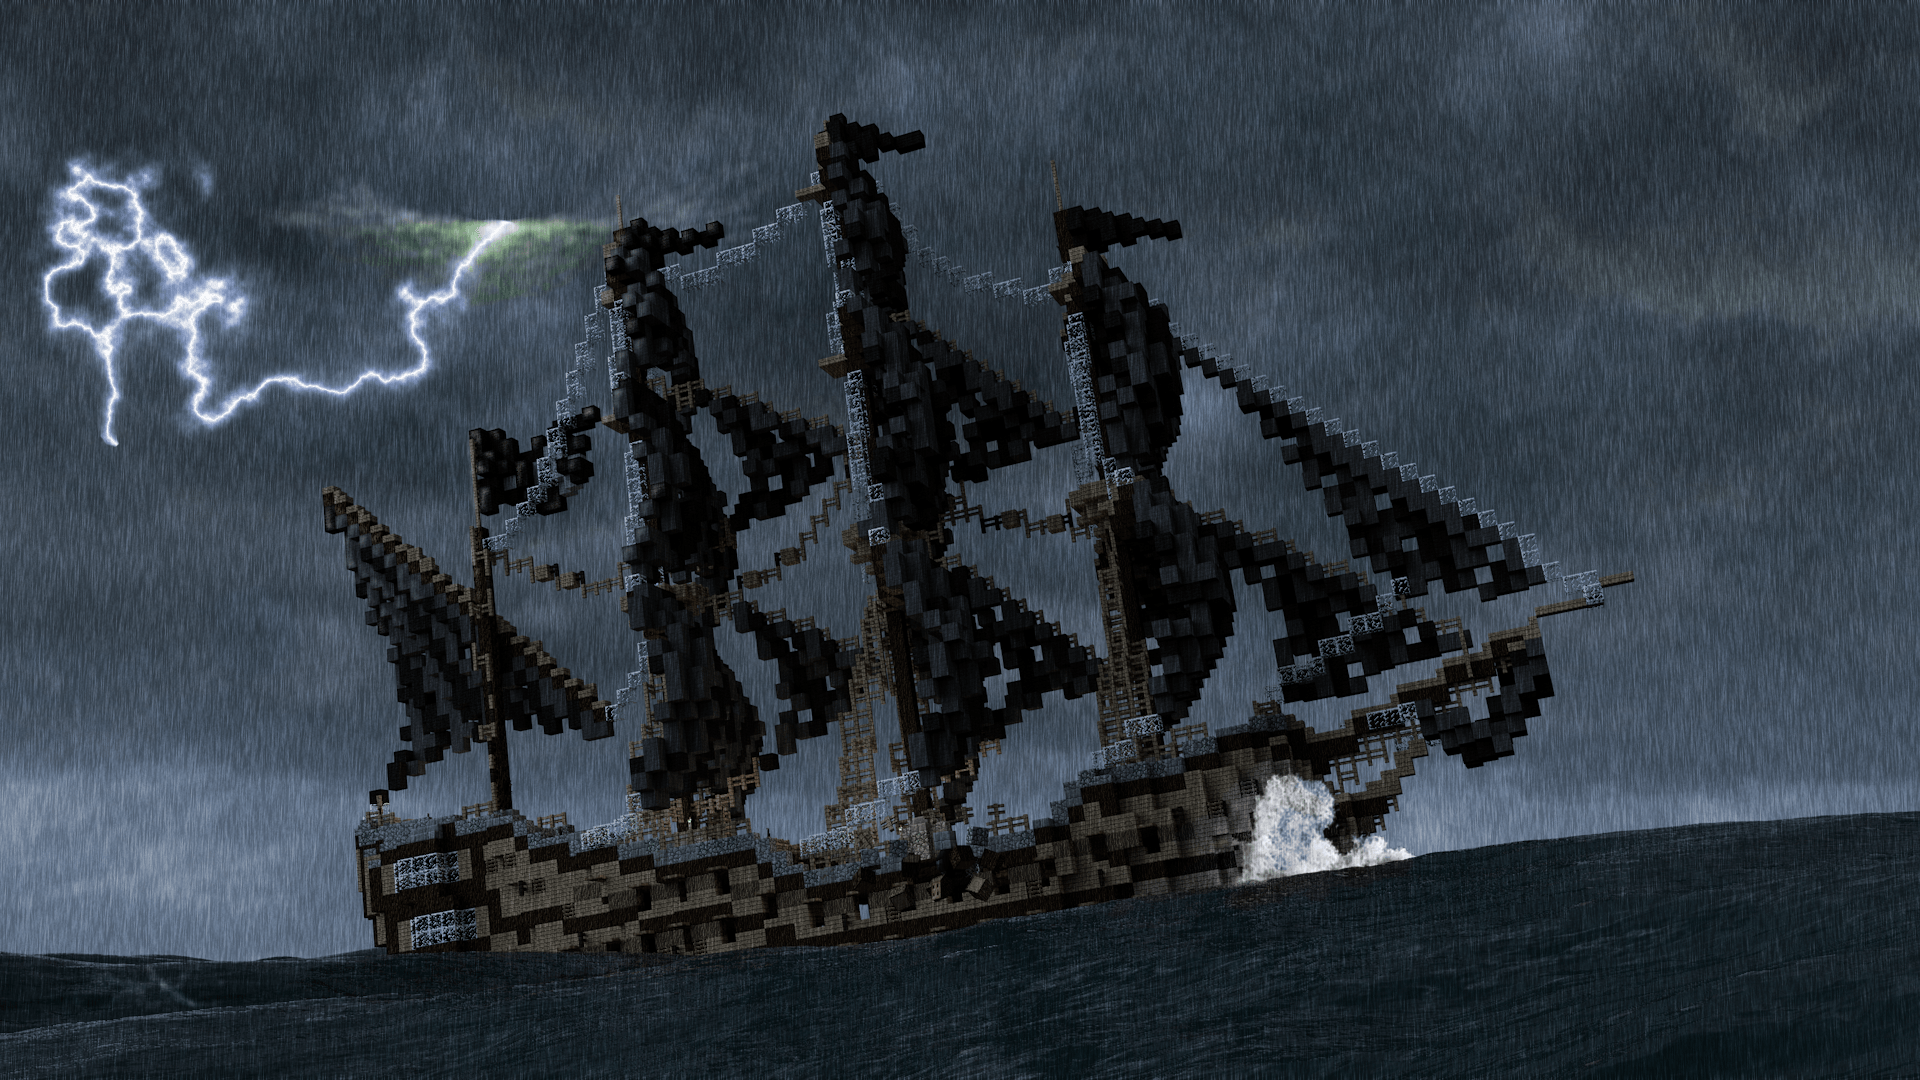 minecraft-ocean-storm-game-hd-wallpaper-1920x1080-20361